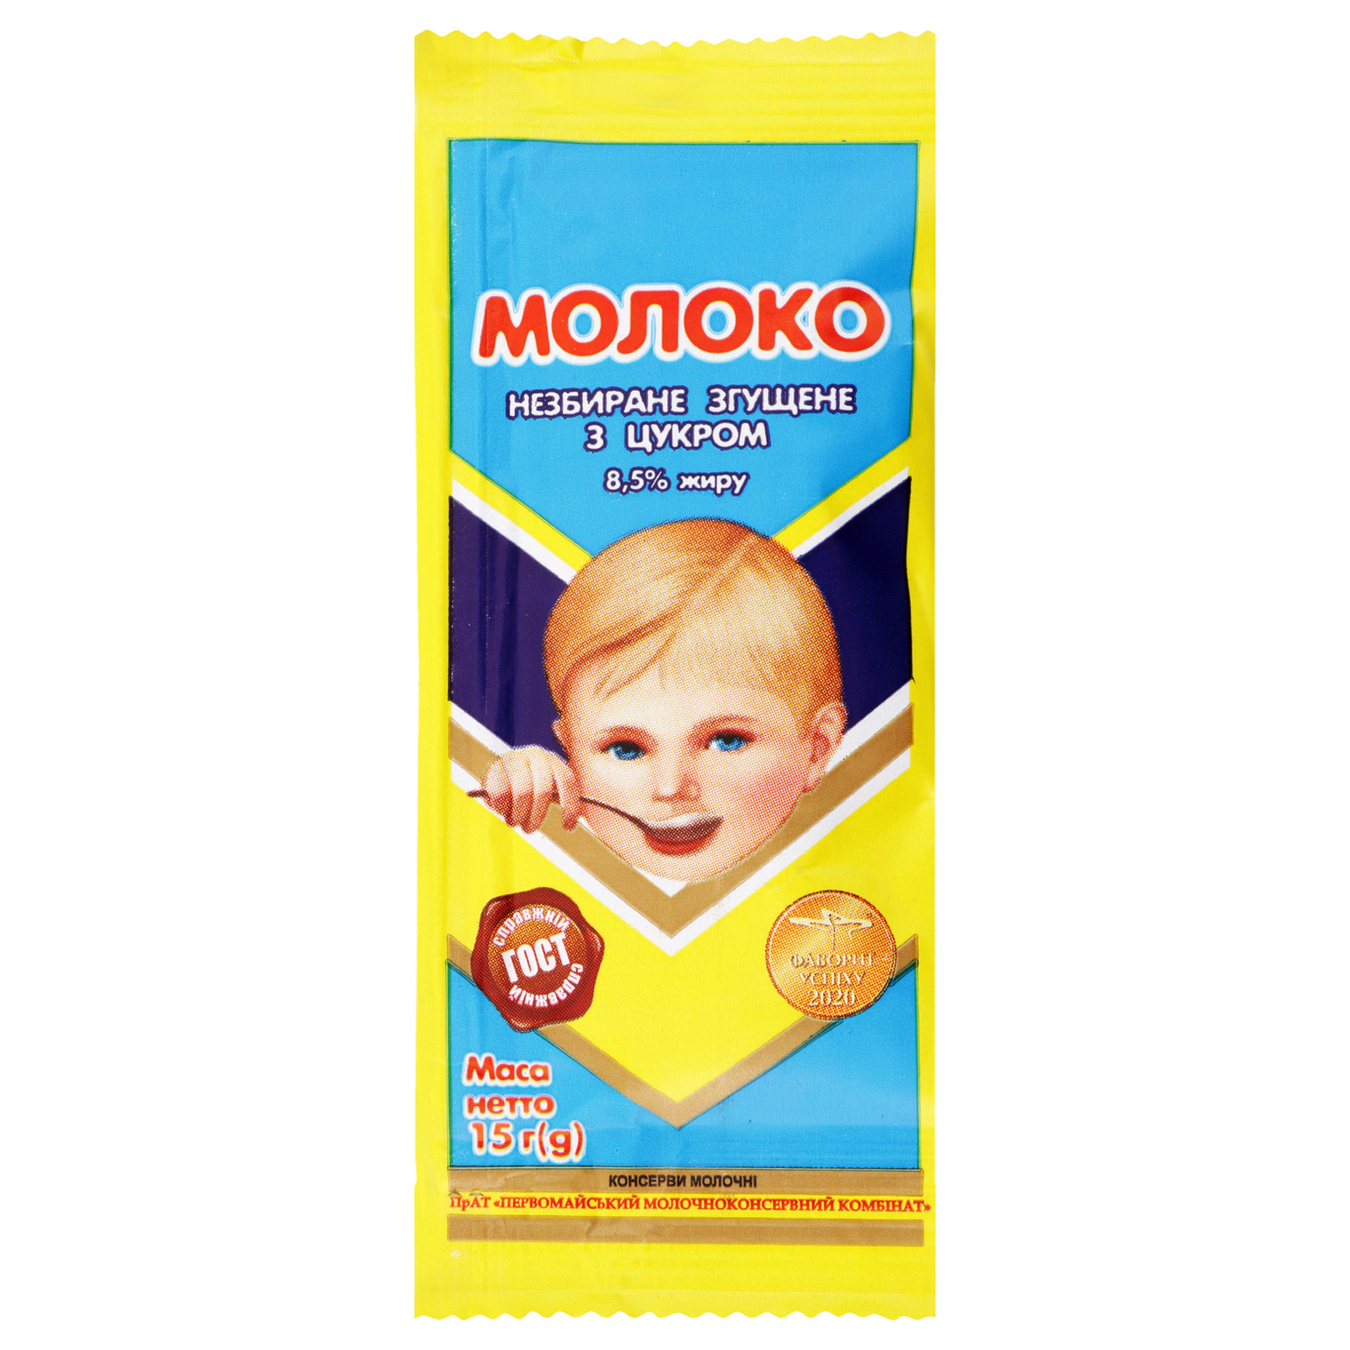 Pervomaisky MKK Whole condensed milk with sugar 8,5% 15g